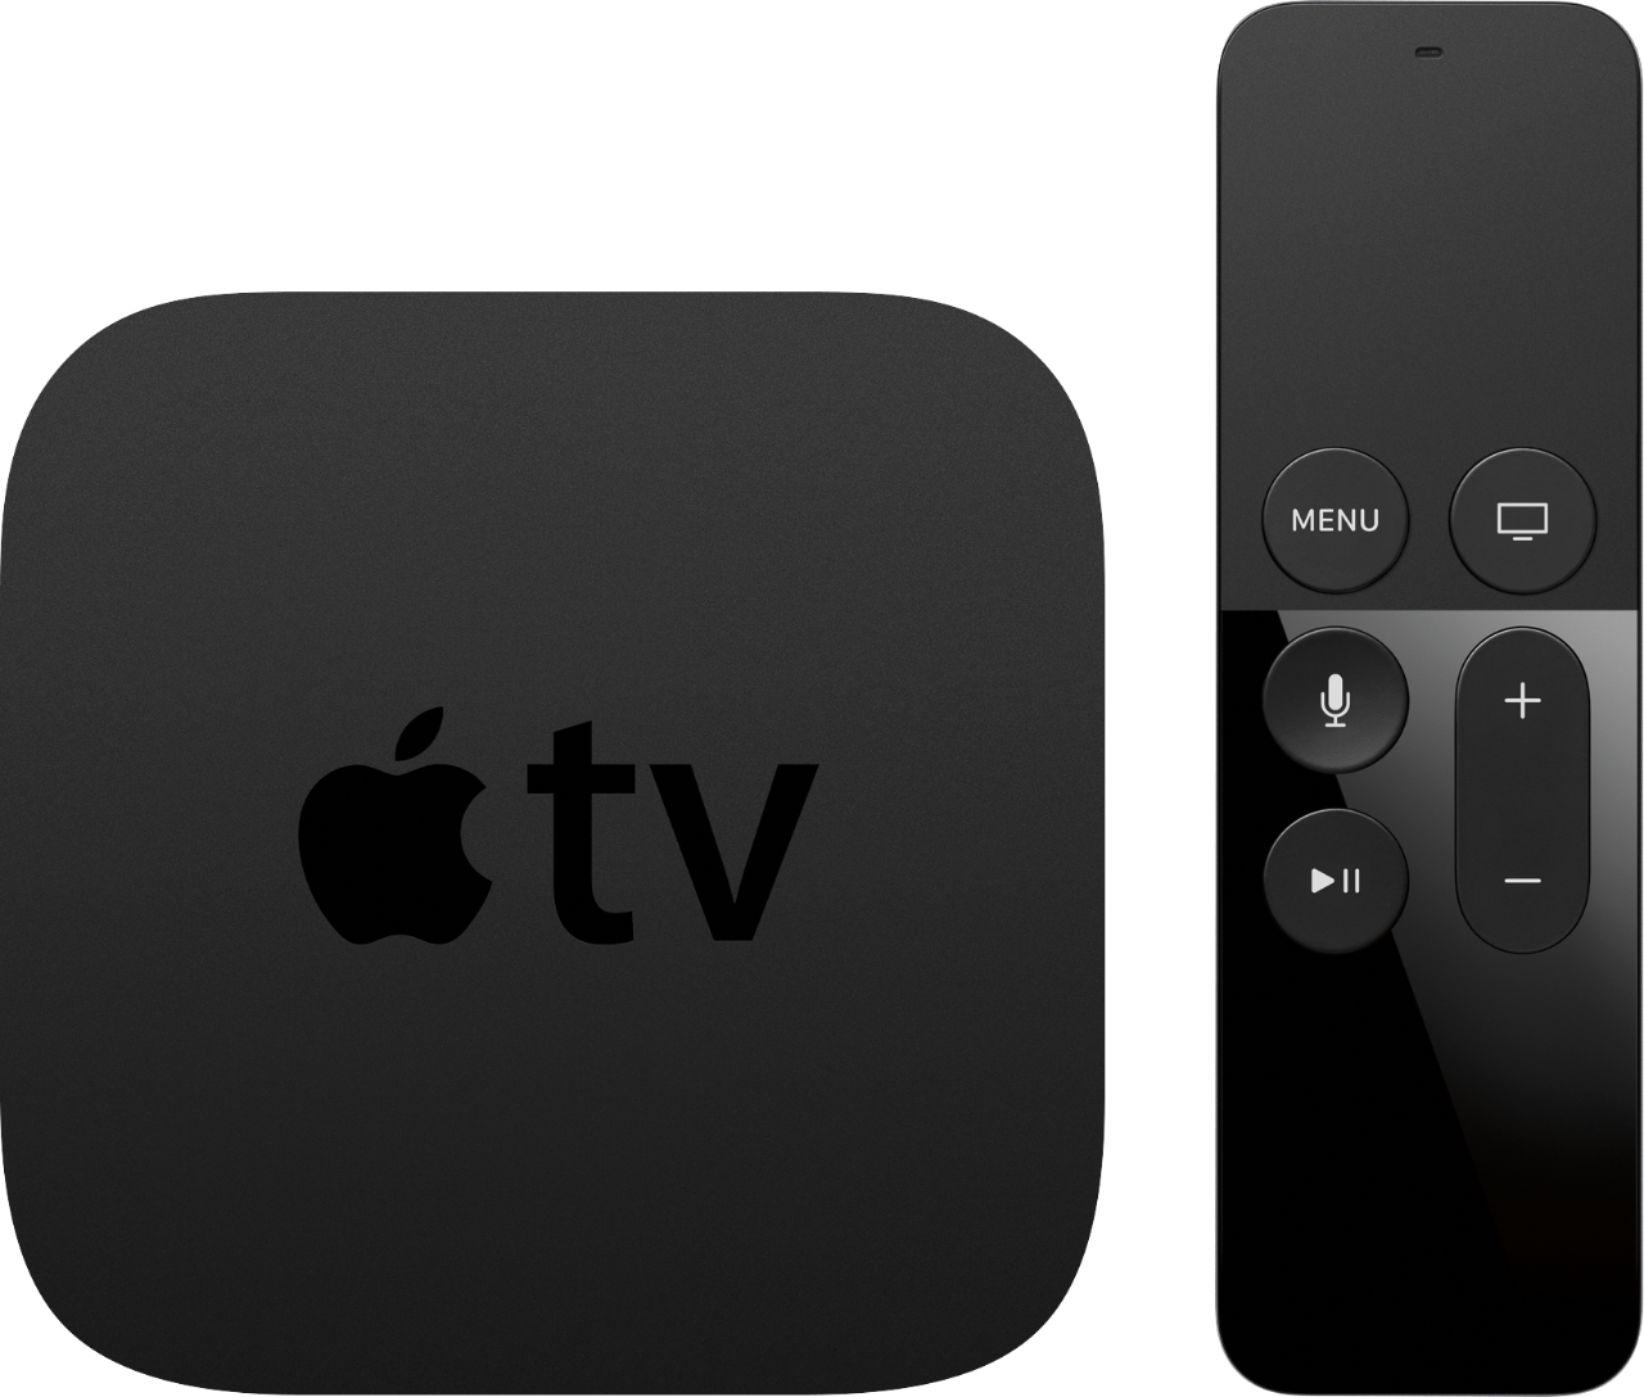 George Stevenson scramble Interconnect Apple TV – 32GB (4th Generation) Black MGY52LL/A - Best Buy